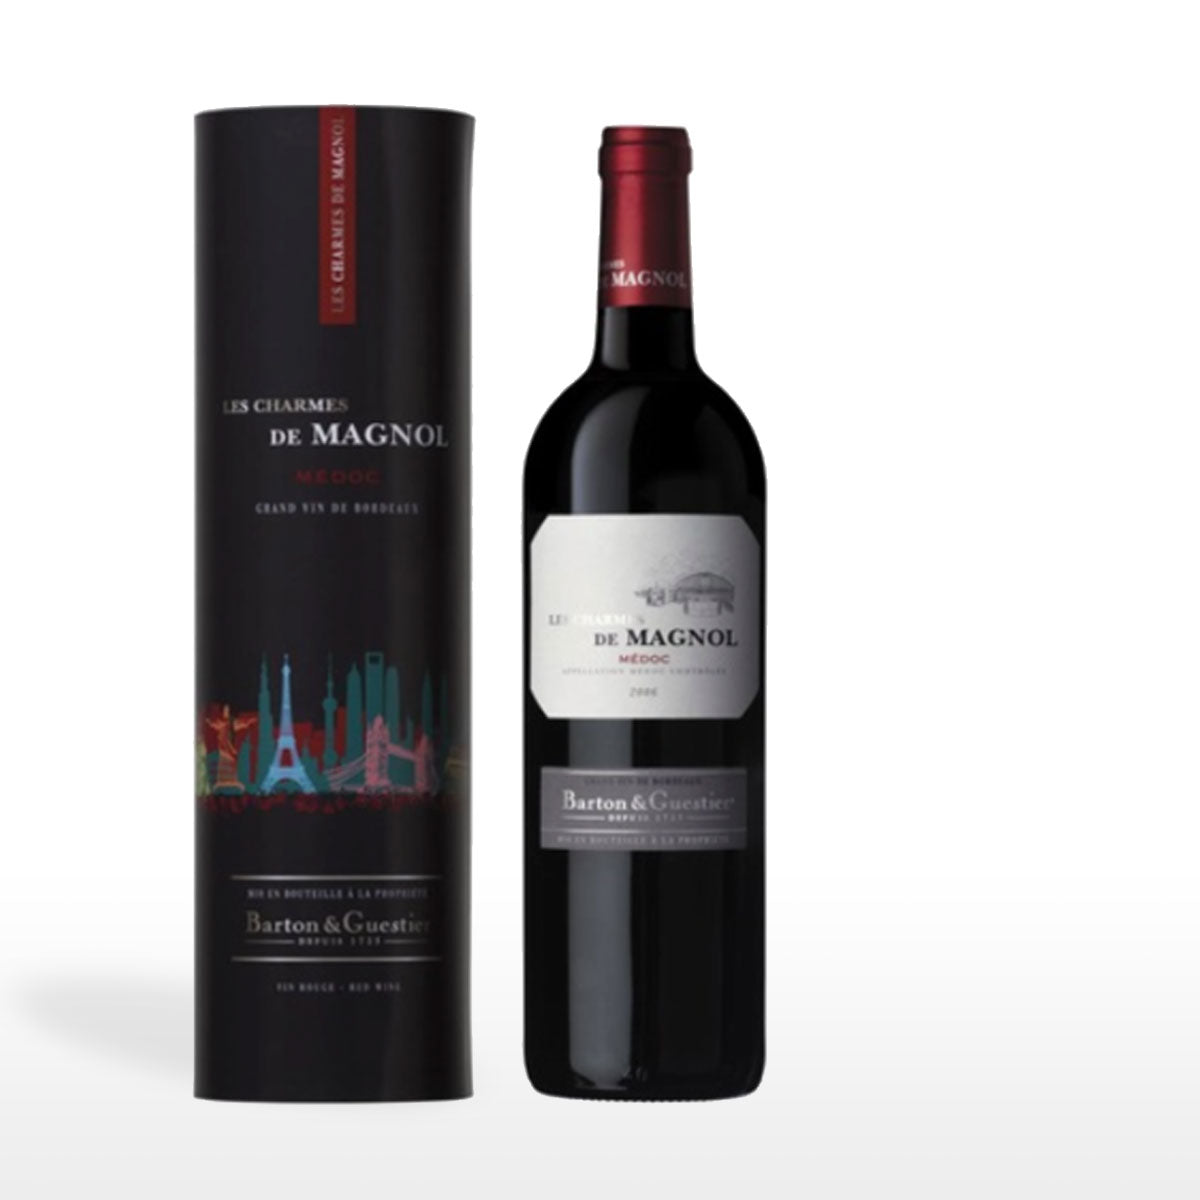 Barton & Guestier 'Les Charmes de Magnol' Medoc | French Red Wine 